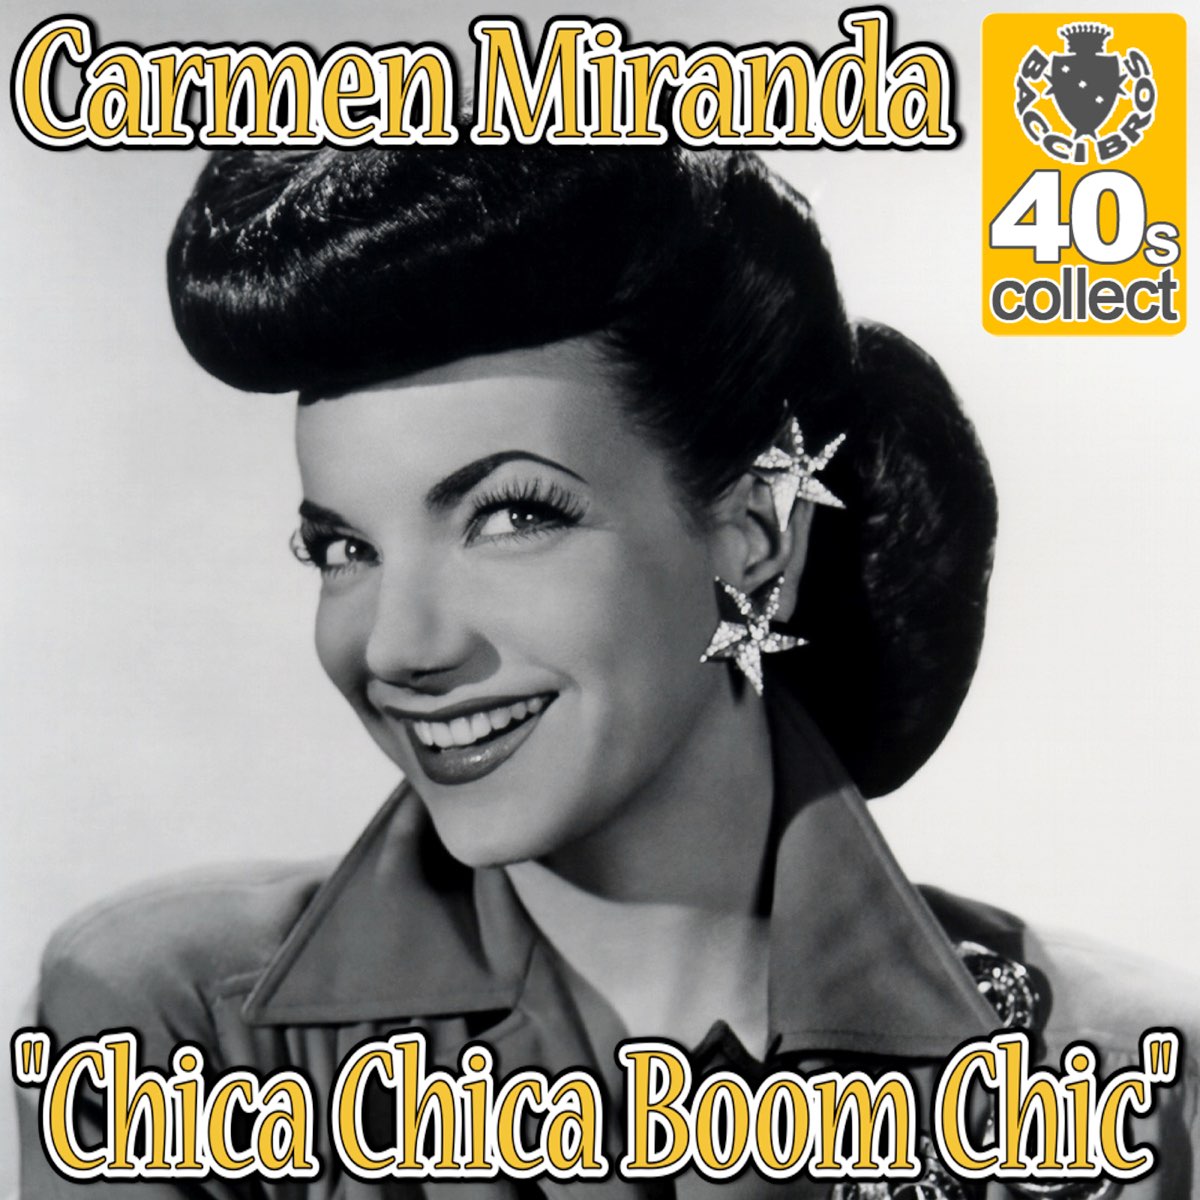 ‎chica Chica Boom Chic Remastered Single Album By Carmen Miranda Apple Music 